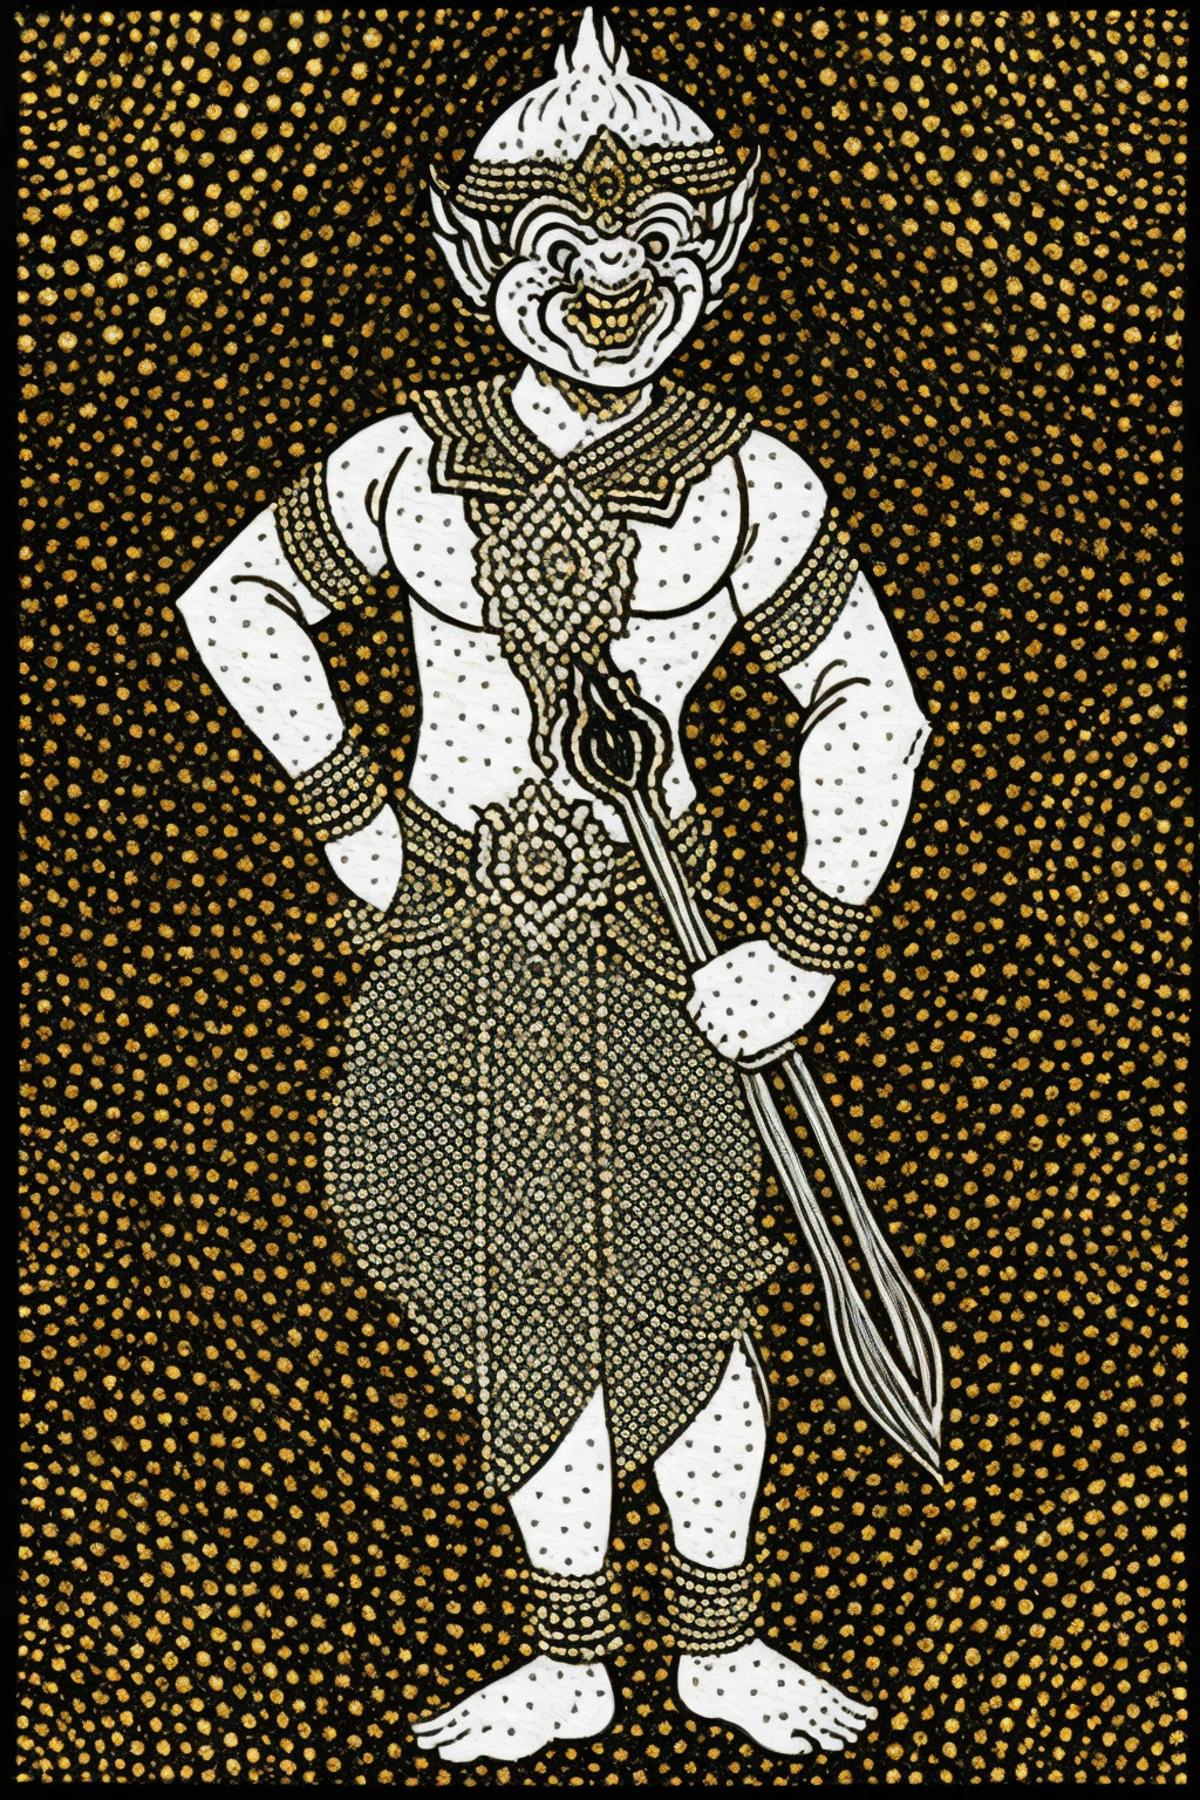 Indigenous Aboriginal Arts image by zwxai